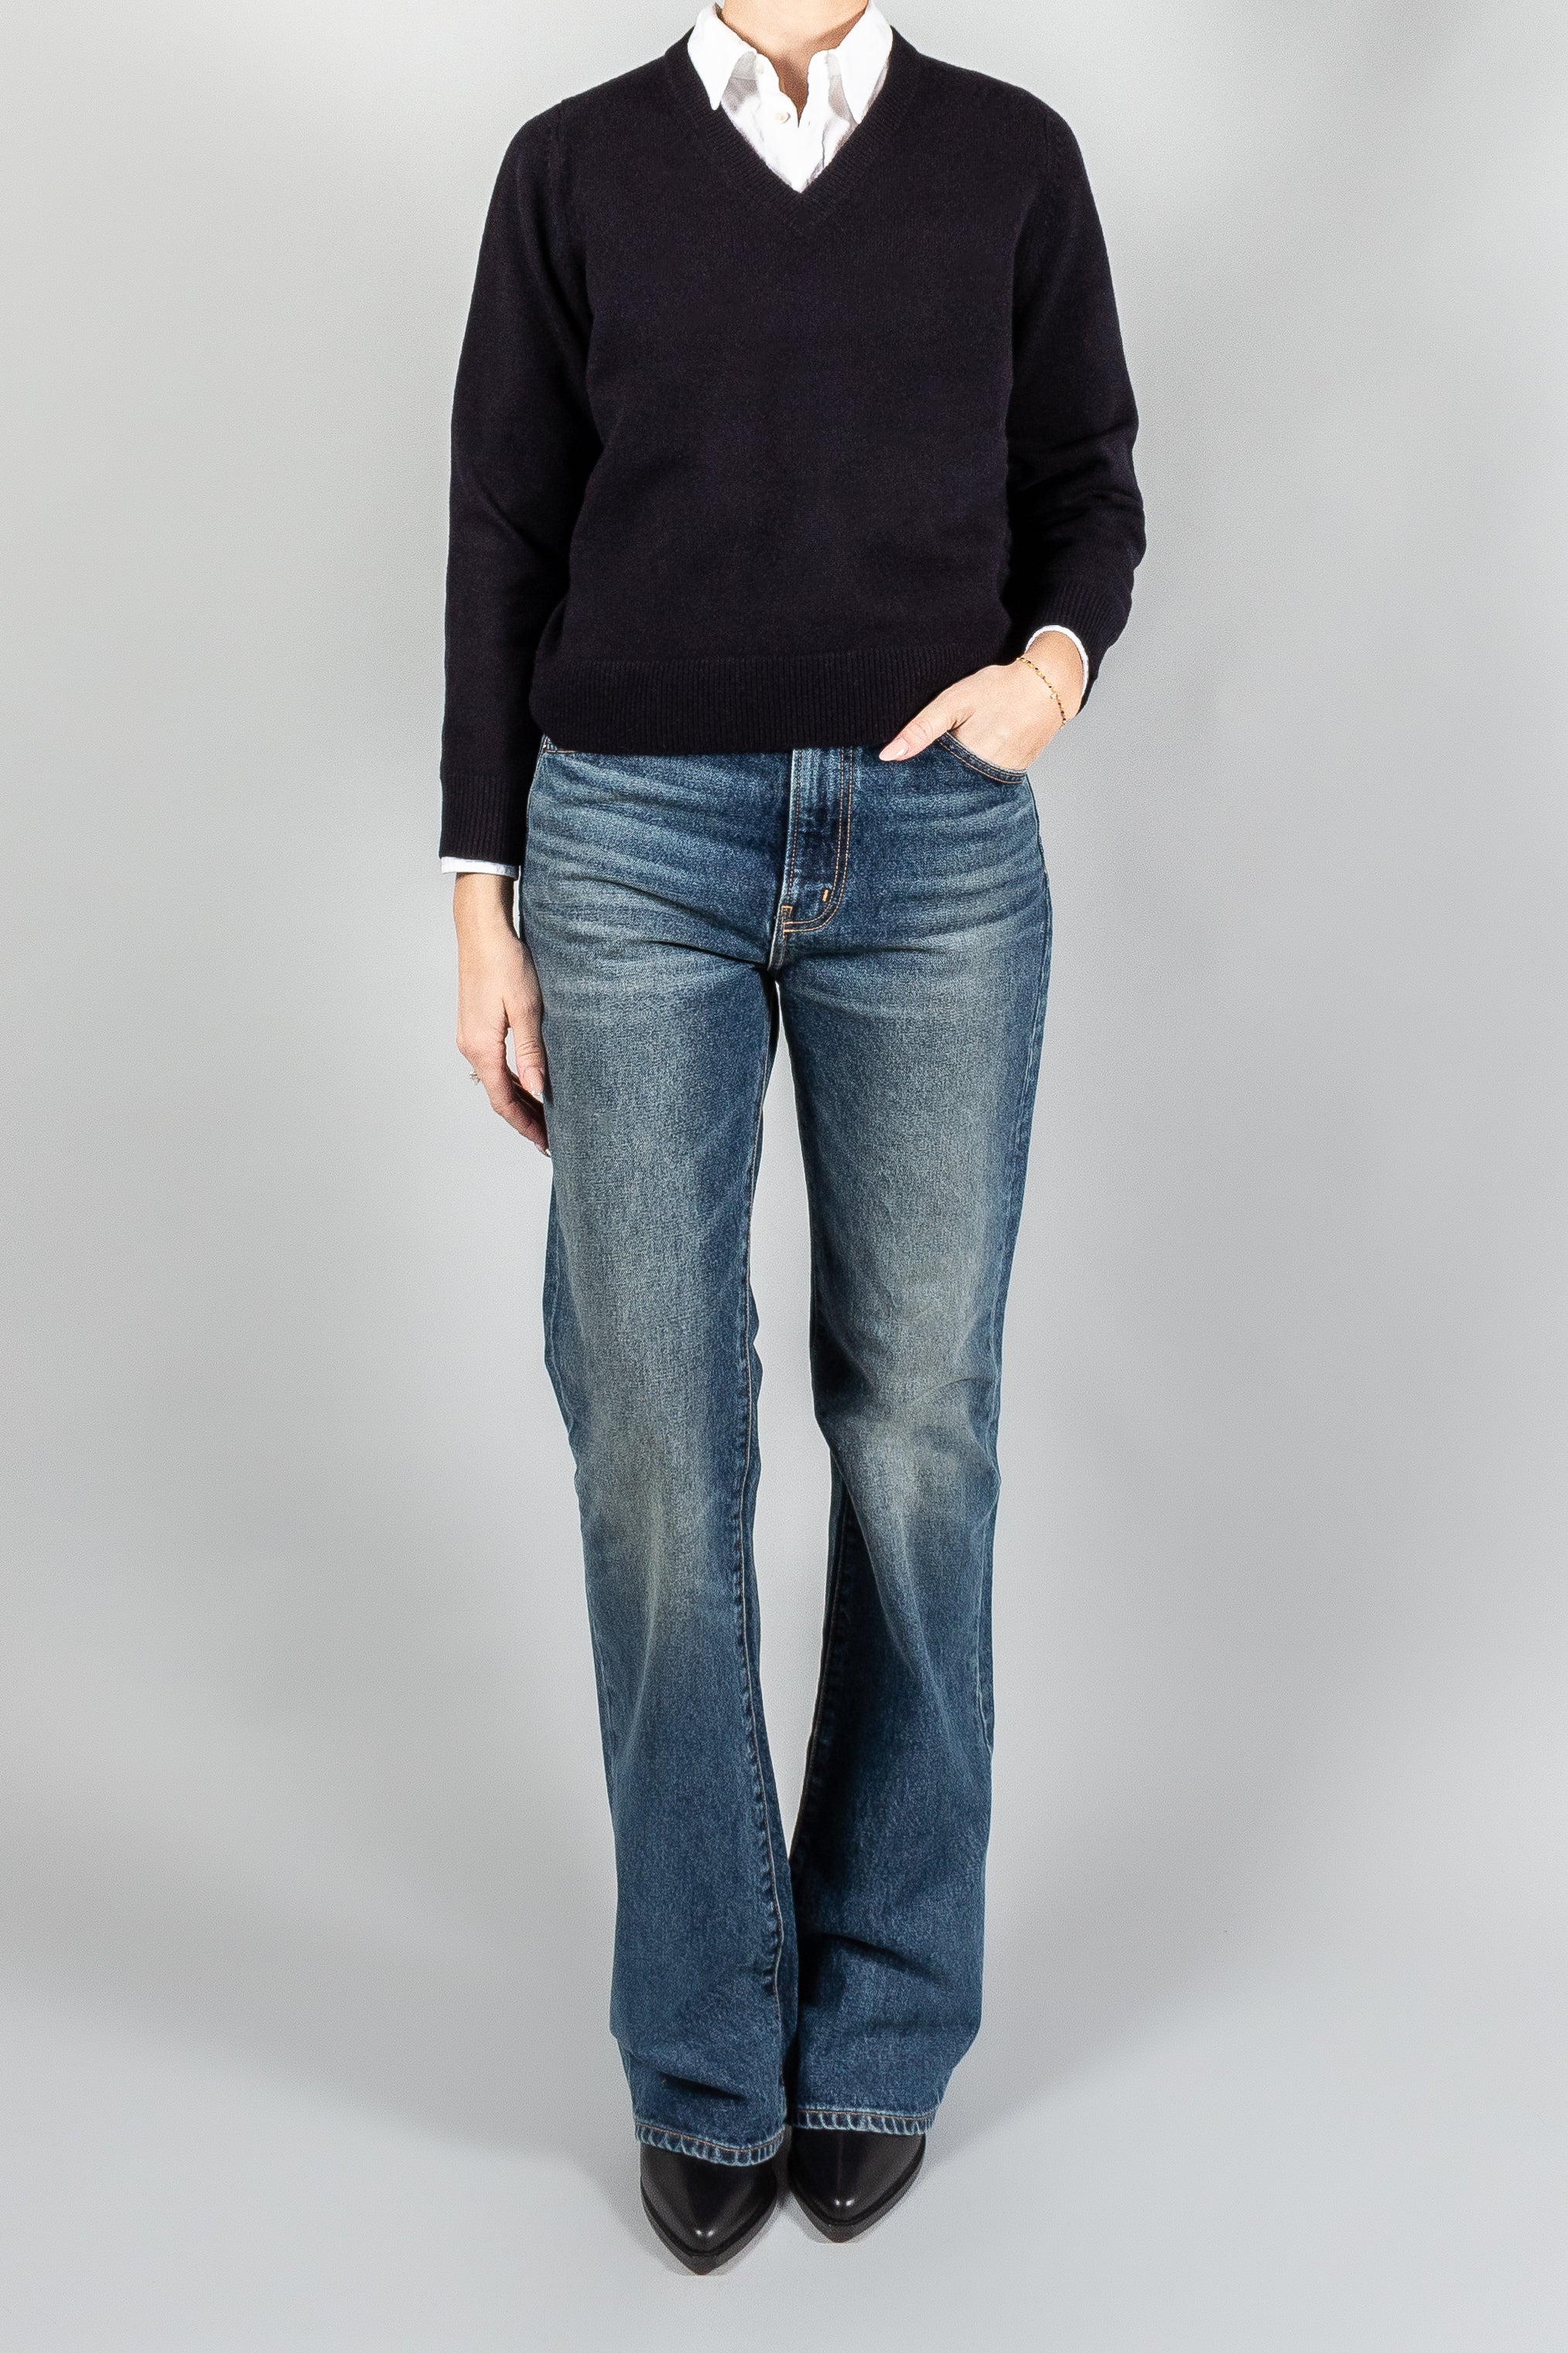 Nili Lotan Priya Cashmere Sweater-Knitwear-Misch-Boutique-Vancouver-Canada-misch.ca